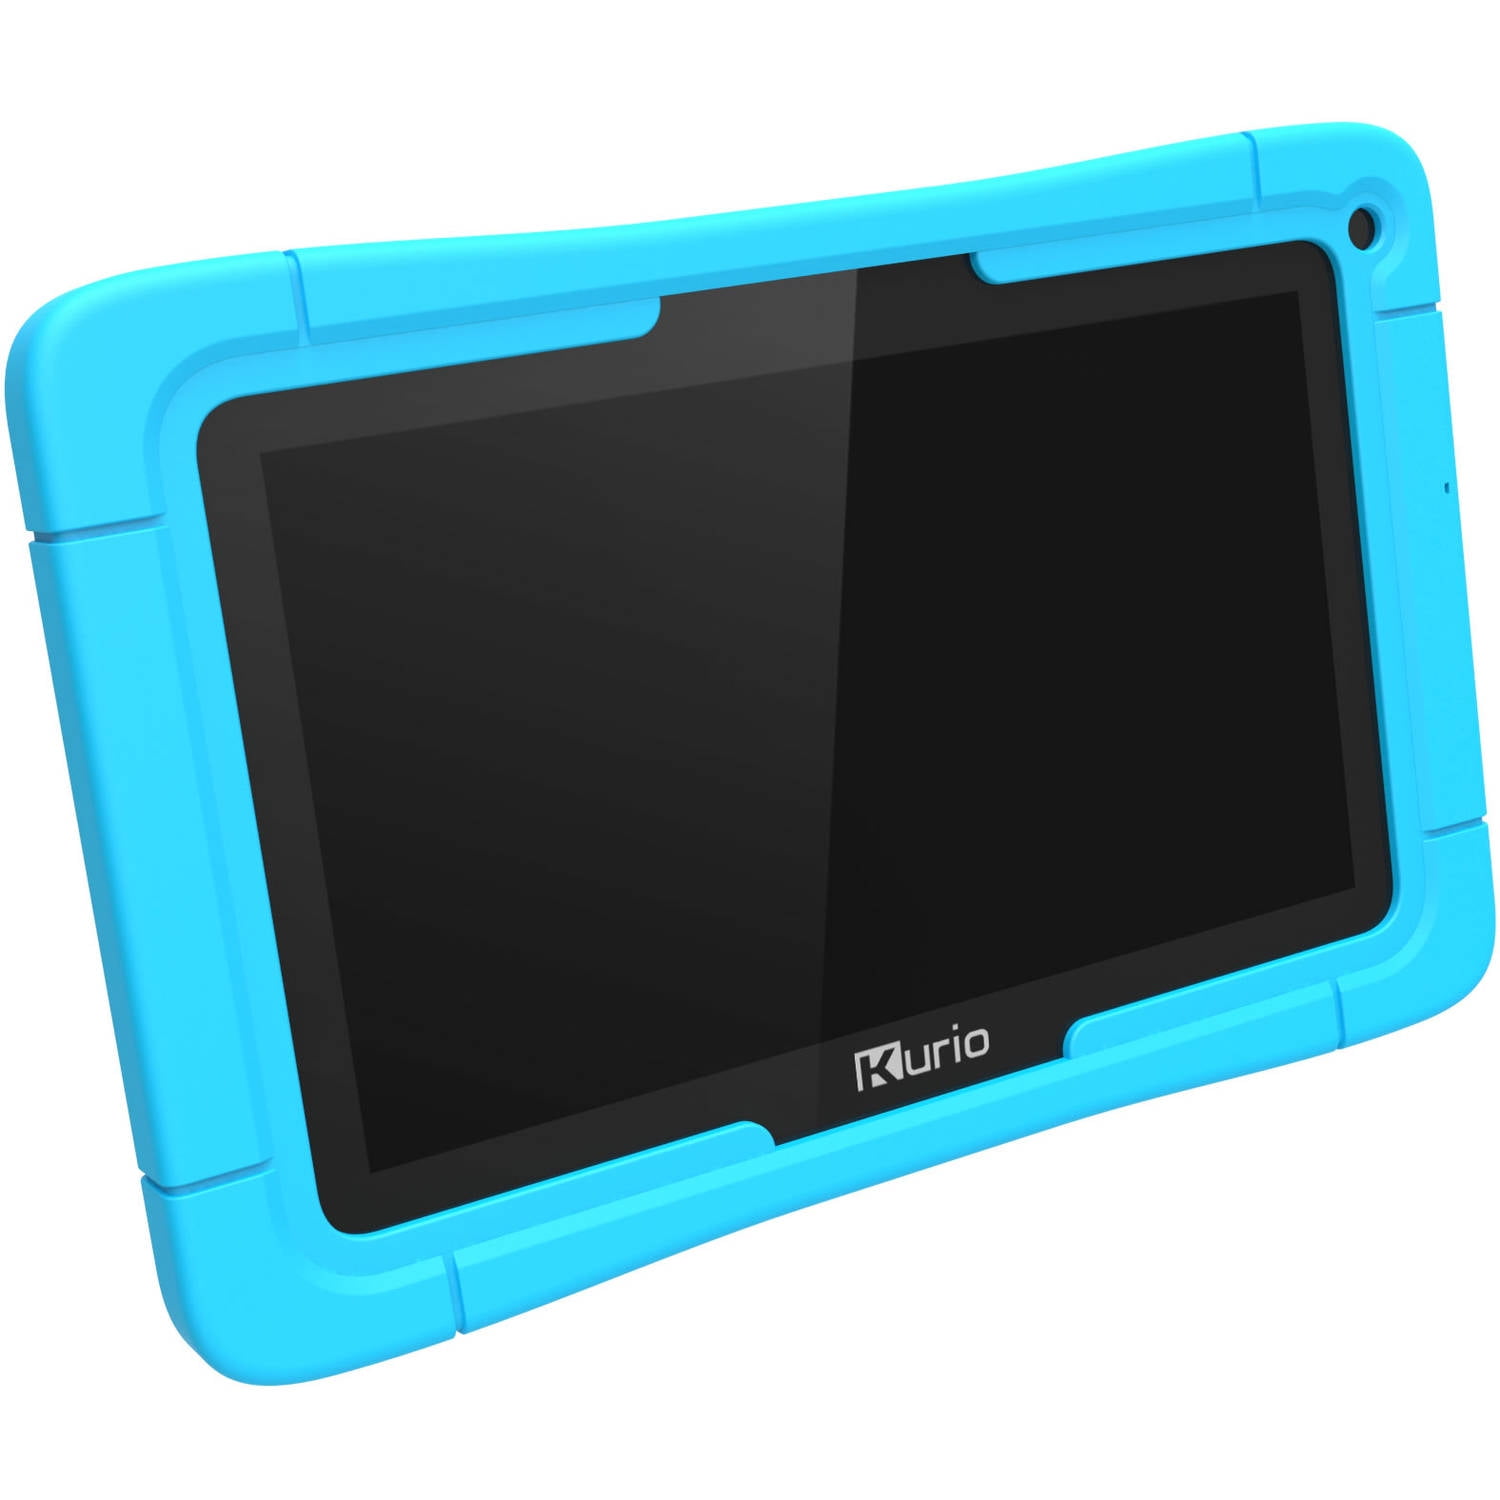 Kurio Tab 7-Inch ChildSafe Android Tablet 8GB Memory 1GB RAM 32GB SD Card  Option